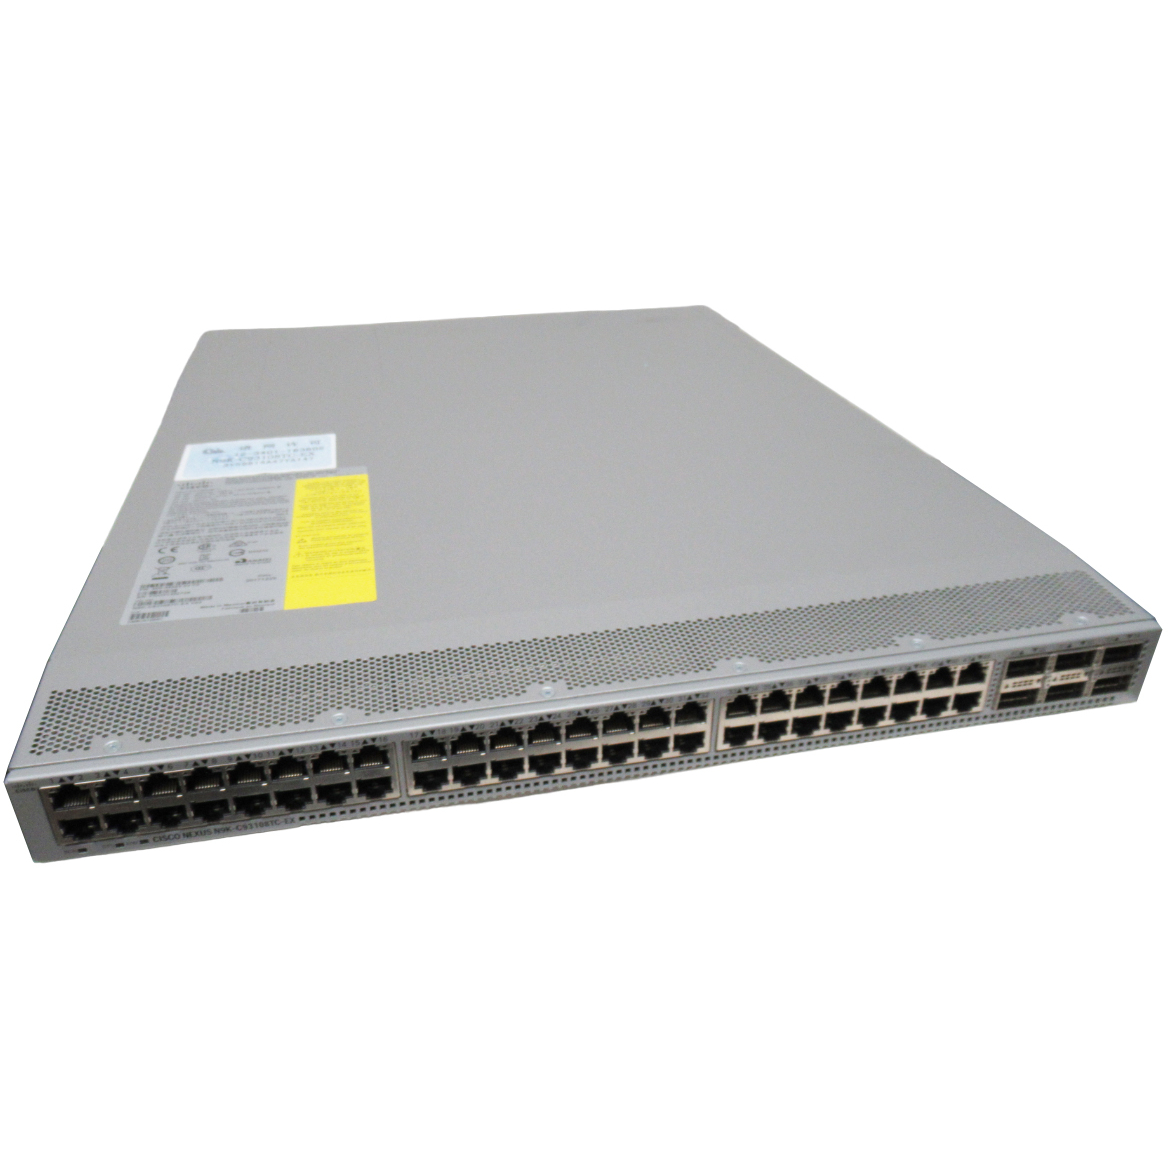 Cisco N3K-C31108TC-V